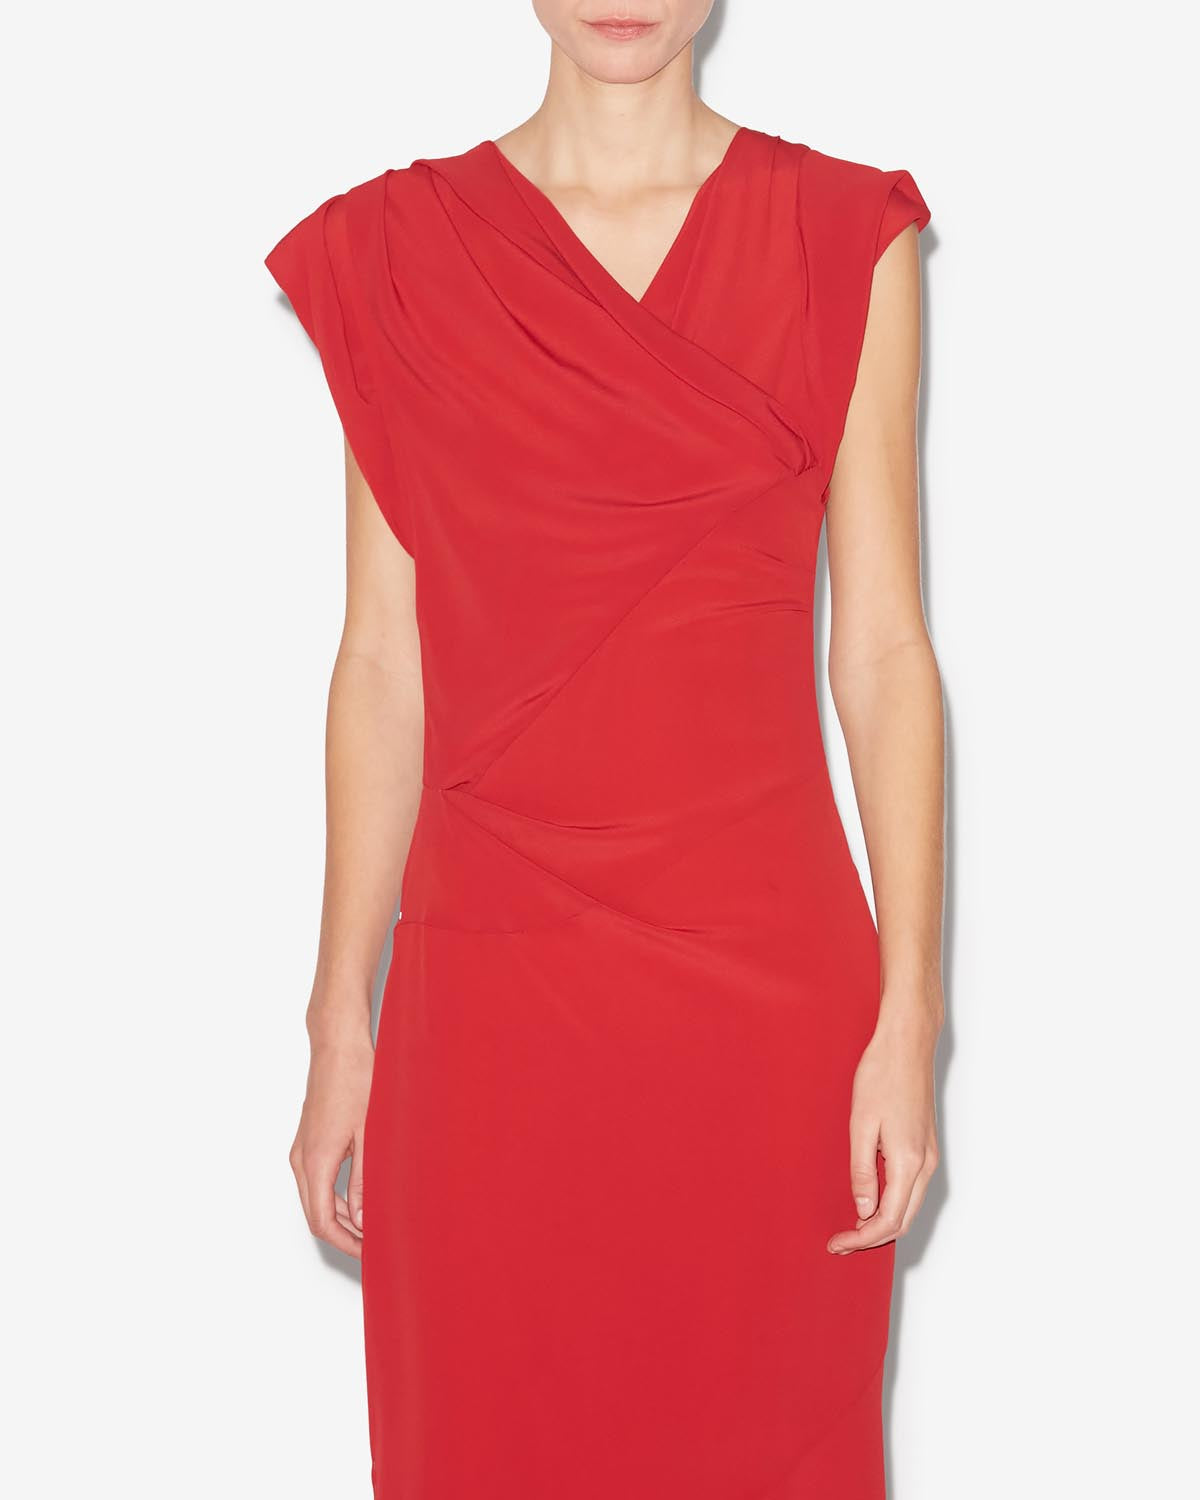 Kidena dress Woman Scarlet red 5